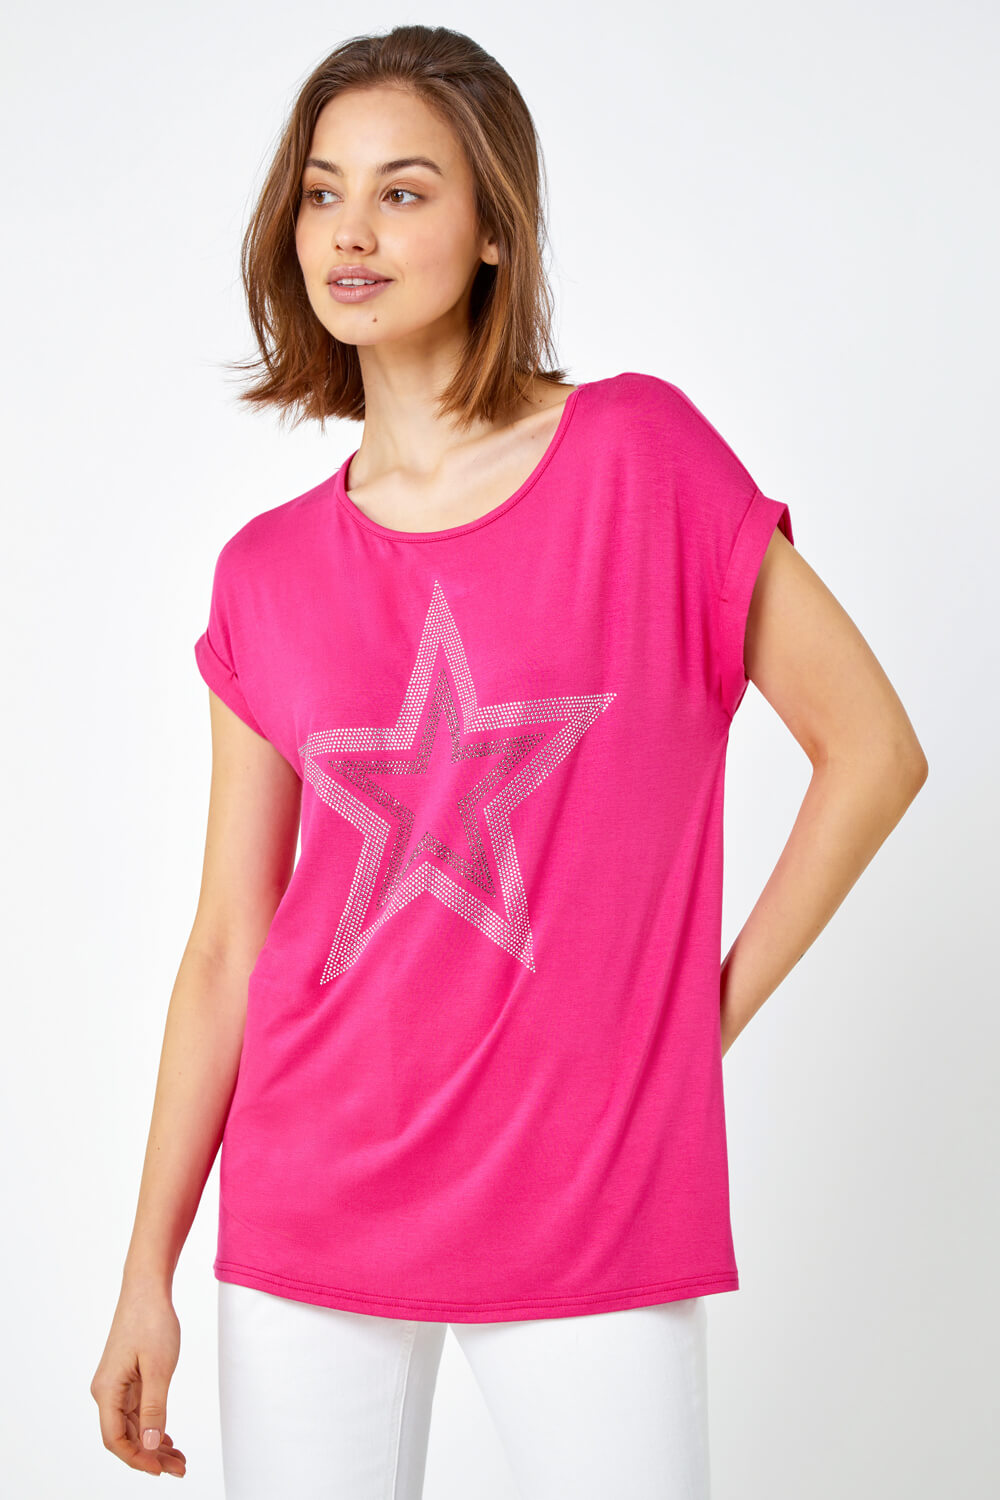 PINK Embellished Star Print T-Shirt , Image 2 of 5